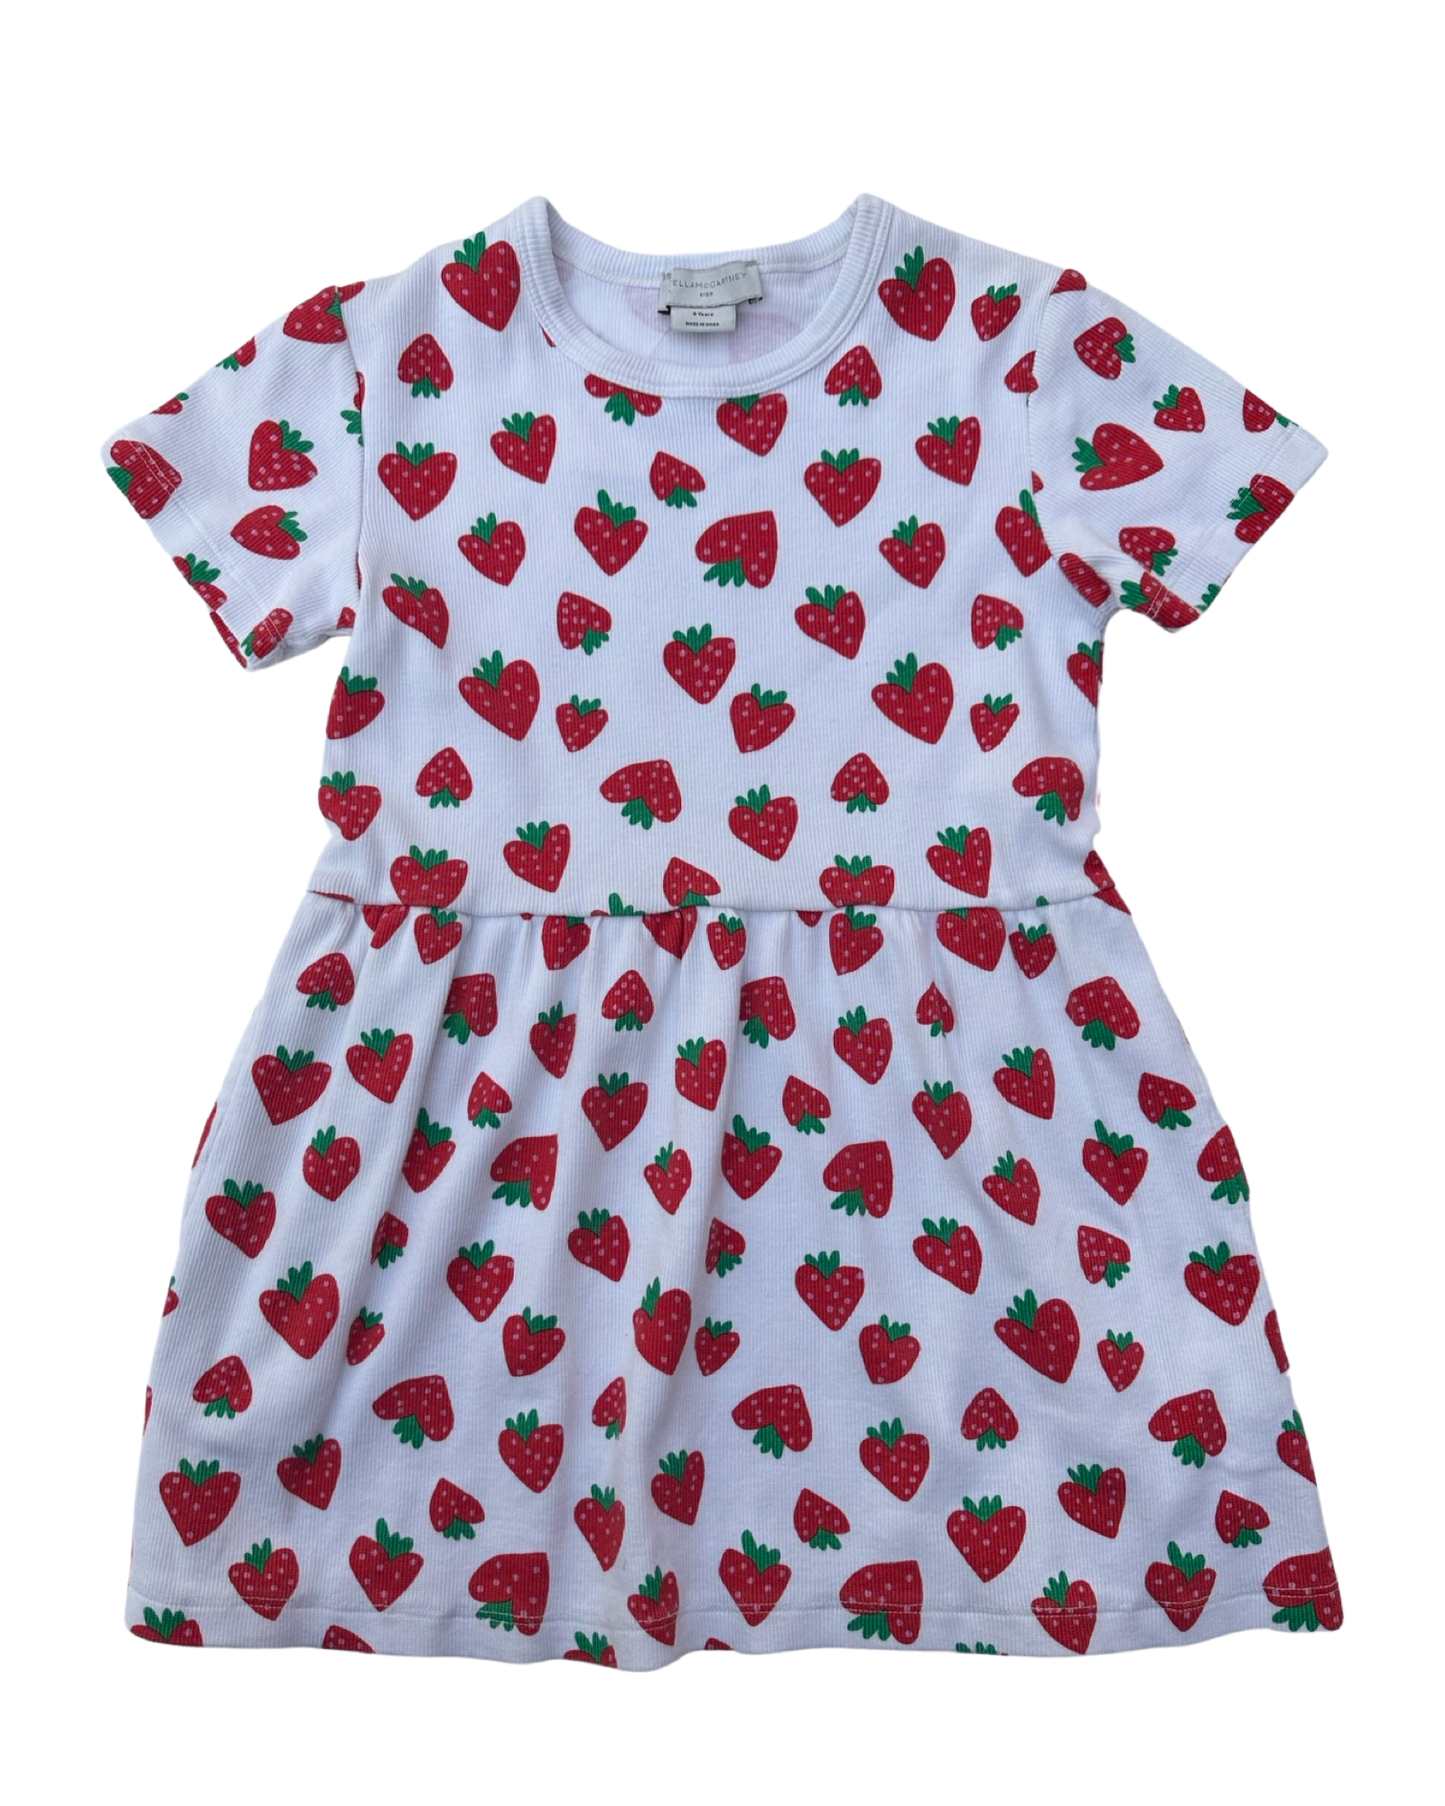 Stella McCartney strawberry printed dress (size 6yrs)